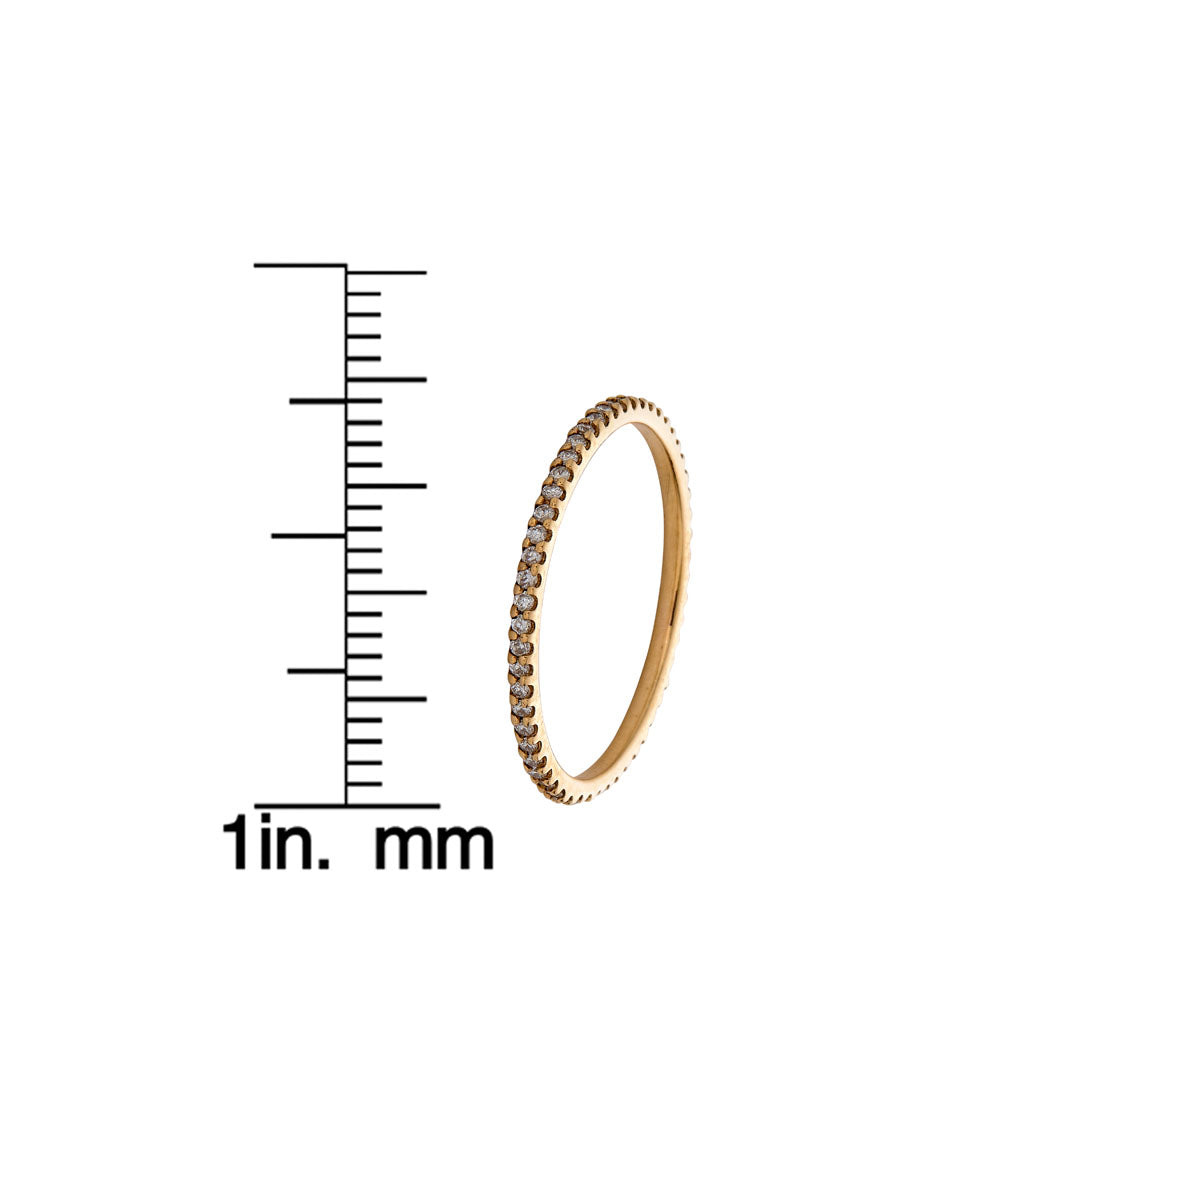 18k diamond gold eternity band side view measurement